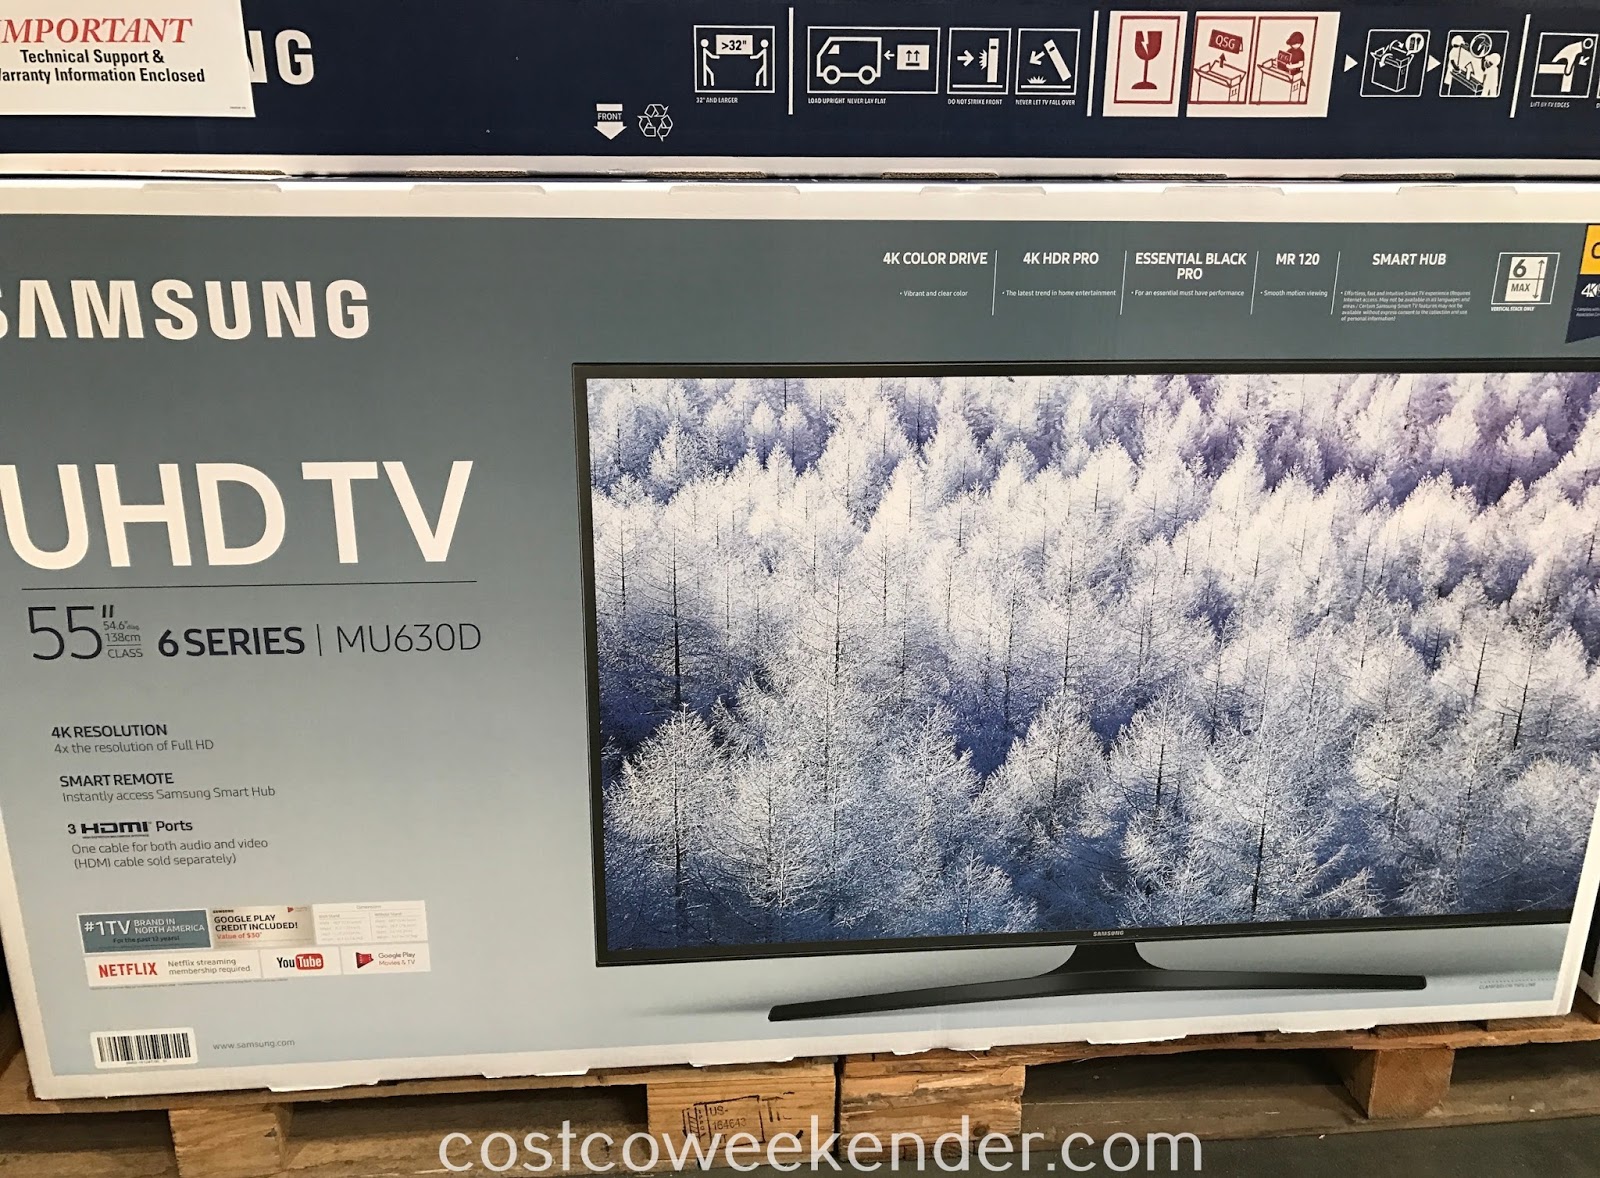 Samsung Un55mu630d 55 4k Uhd Led Lcd Tv Costco Weekender